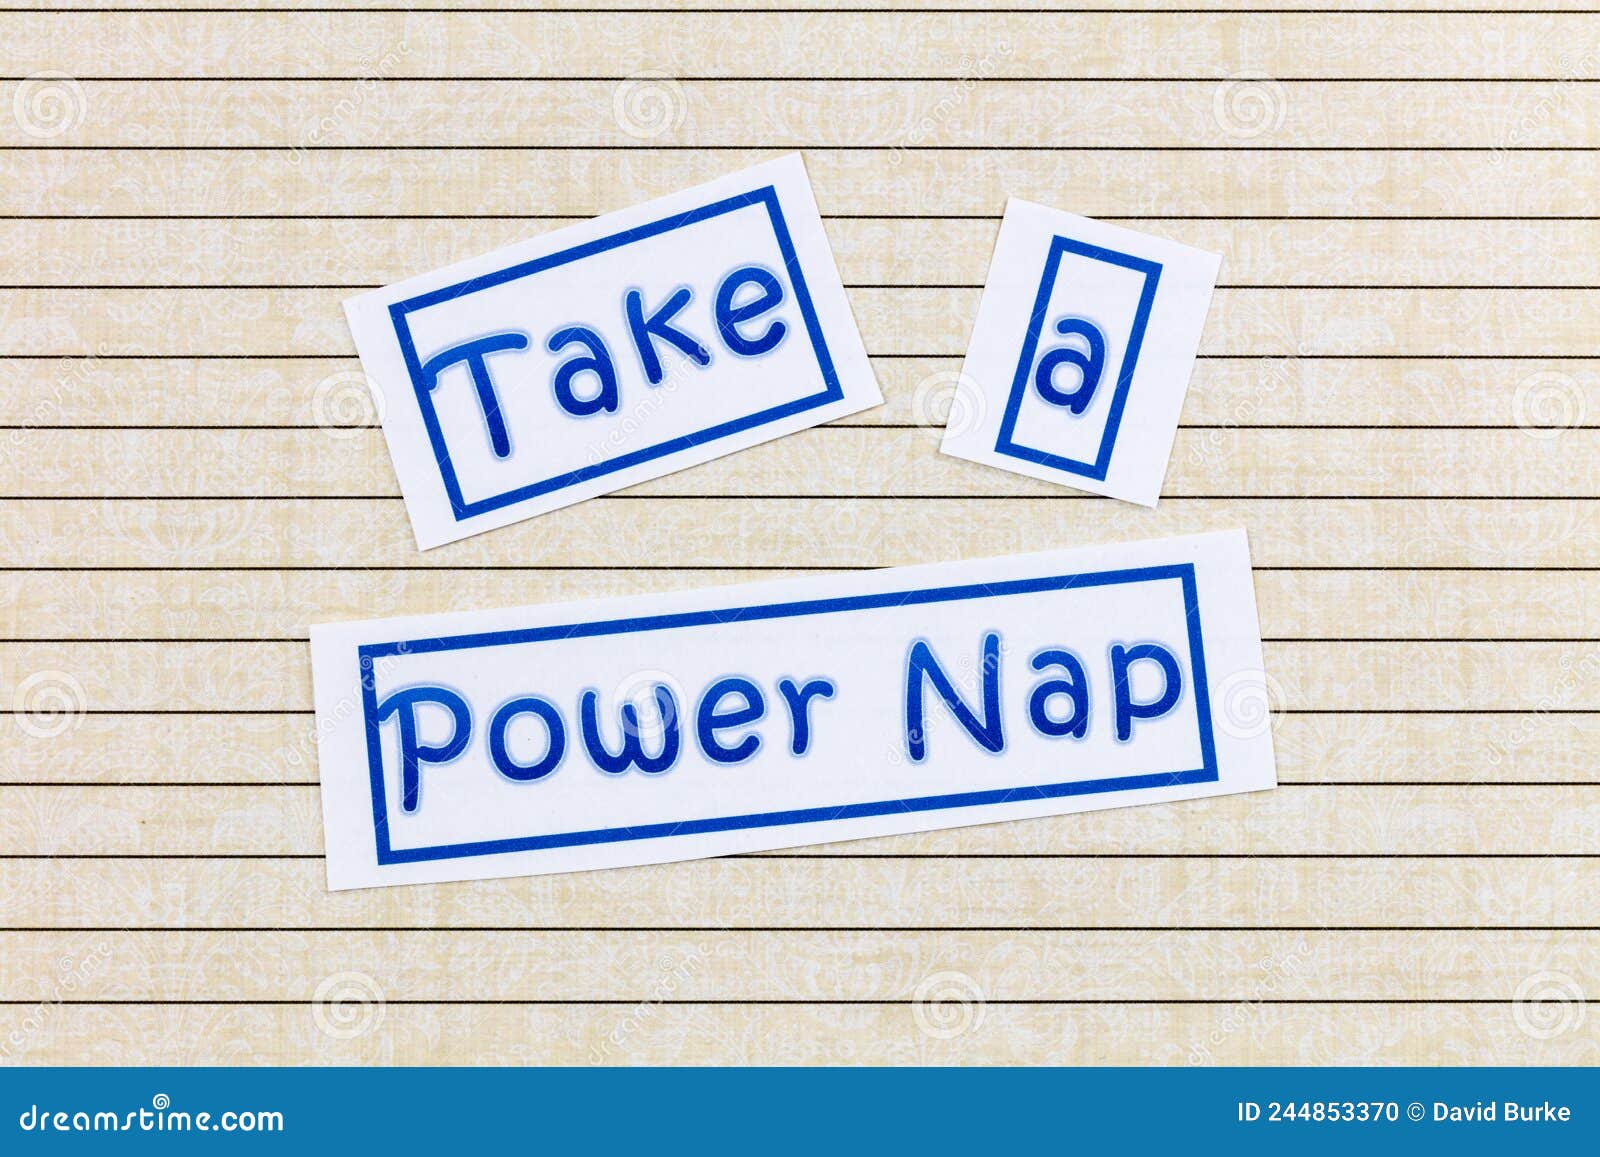 power nap tired people sleep break restful relax lifestyle